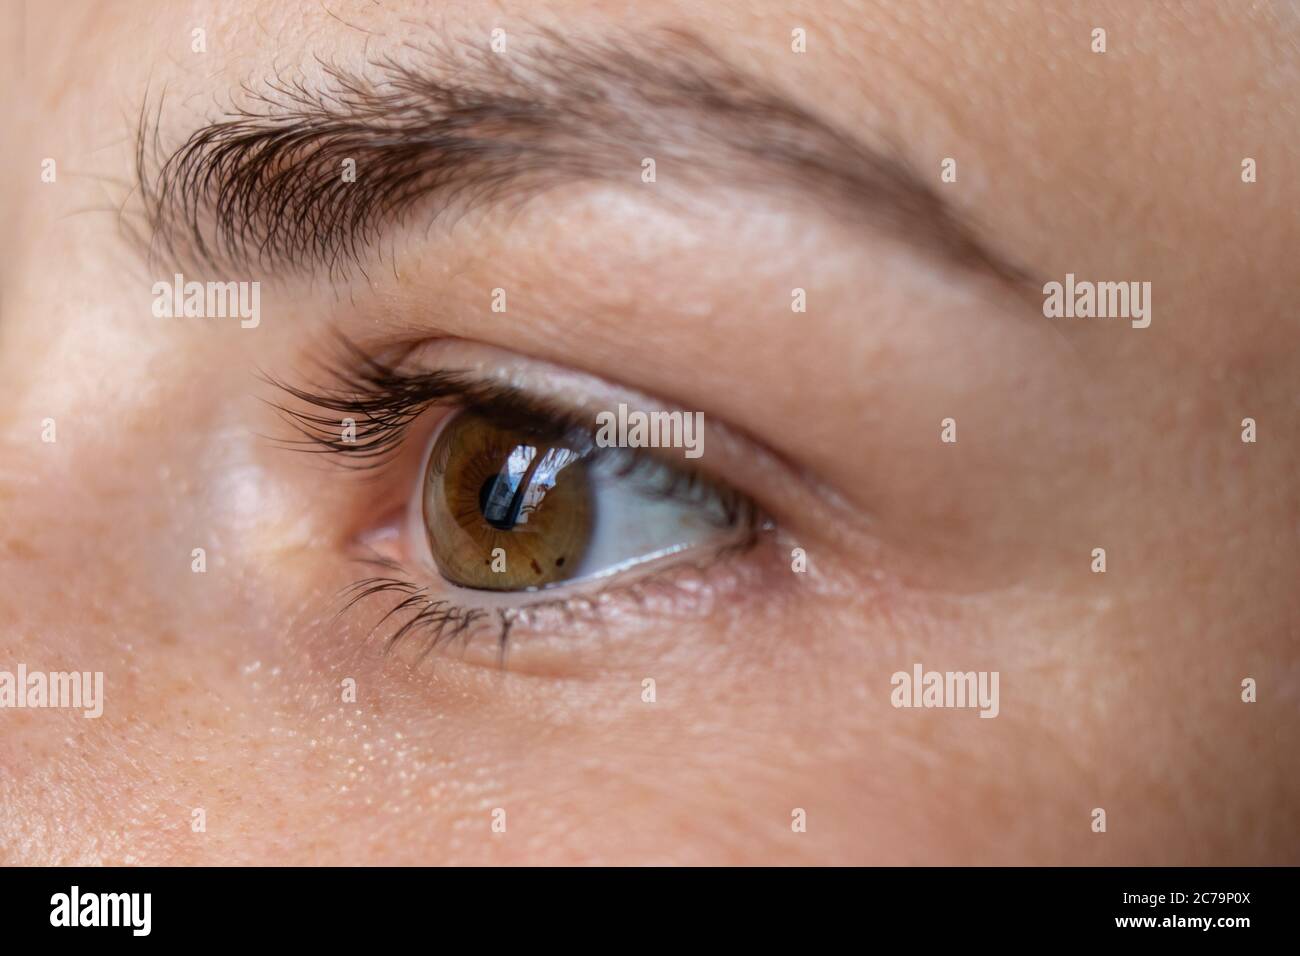 Macro eye photo. Keratoconus - eye disease, thinning of the cornea in the form of a cone. The cornea plastic Stock Photo